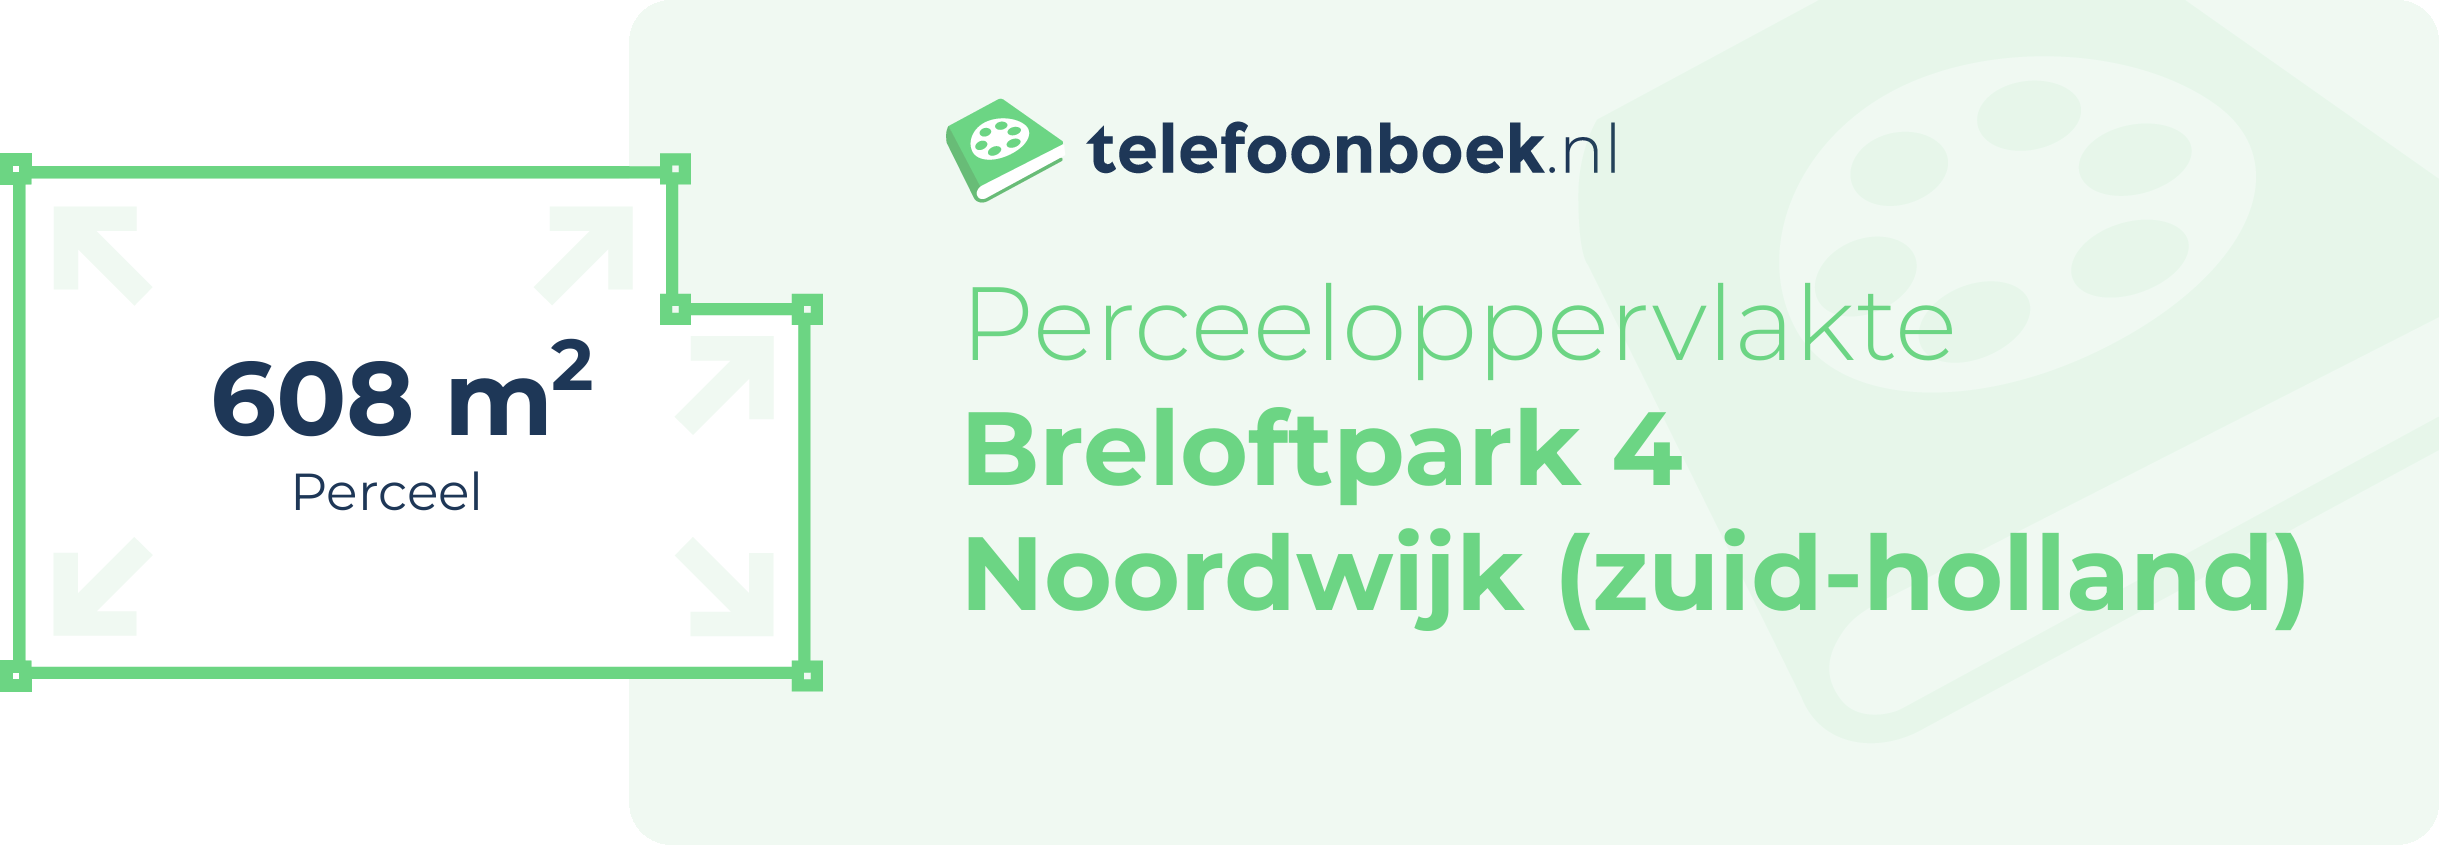 Perceeloppervlakte Breloftpark 4 Noordwijk (Zuid-Holland)